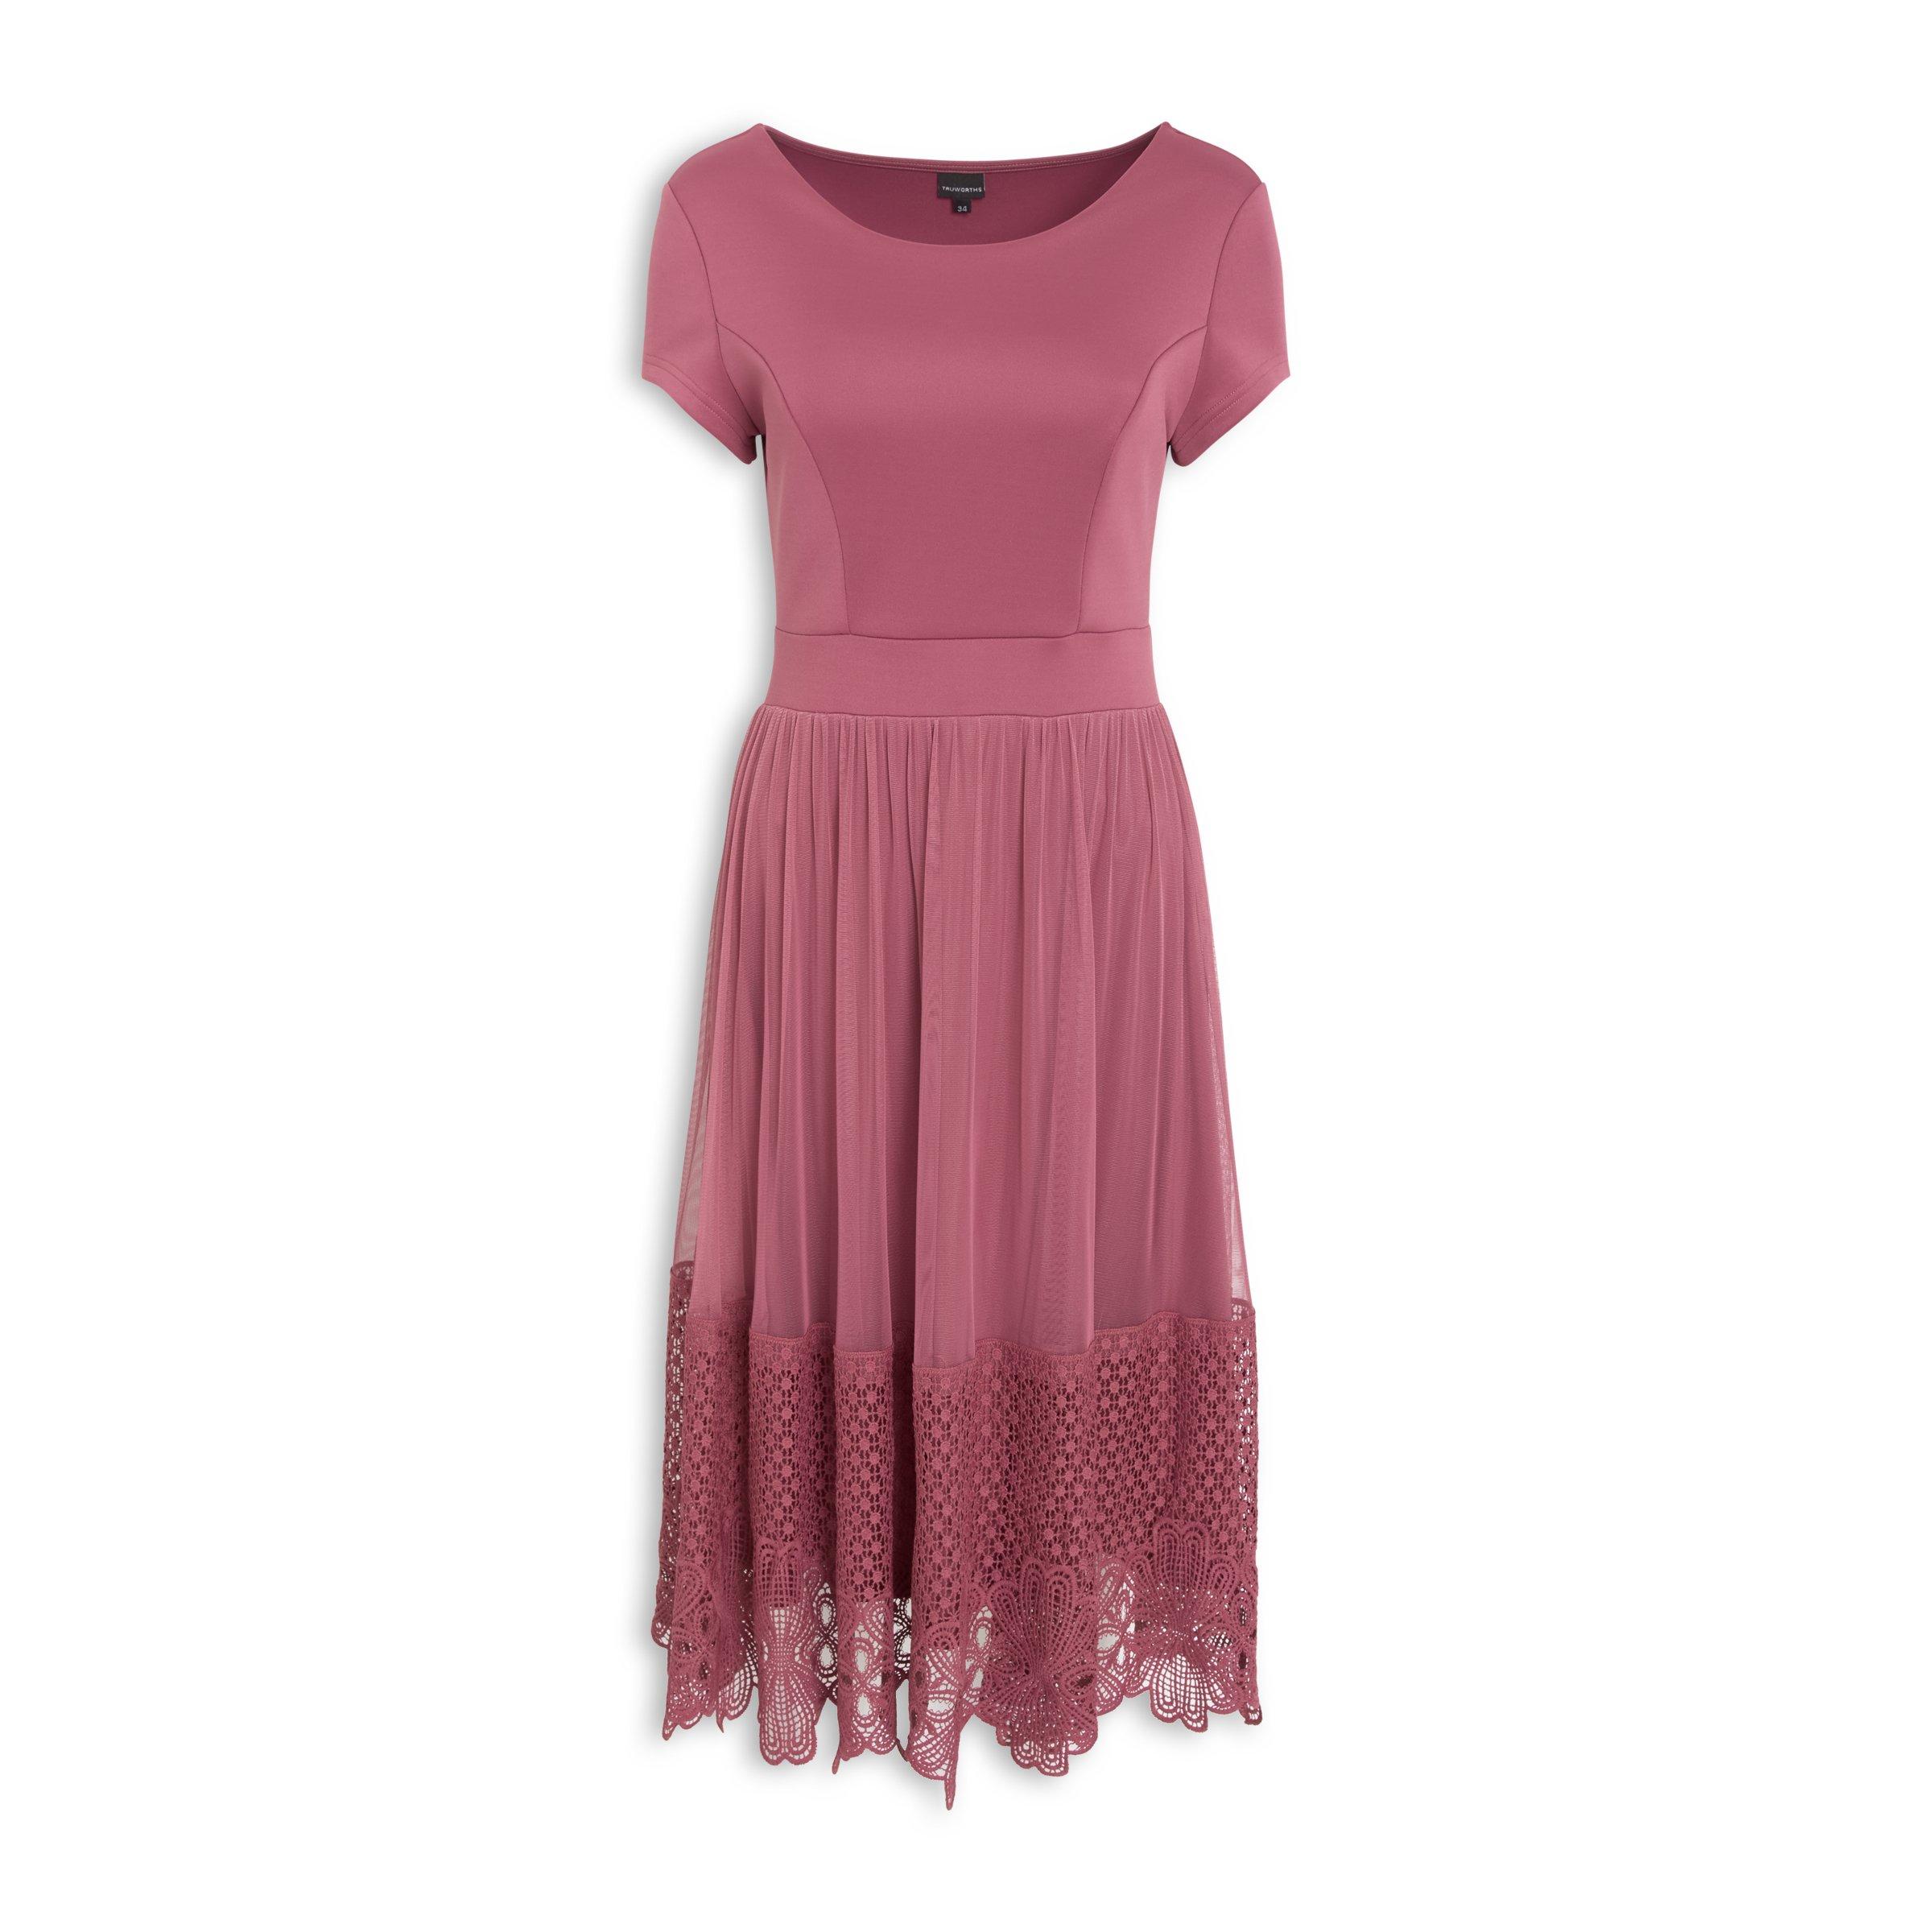 Pink Dresses At Truworths Flash Sales ...